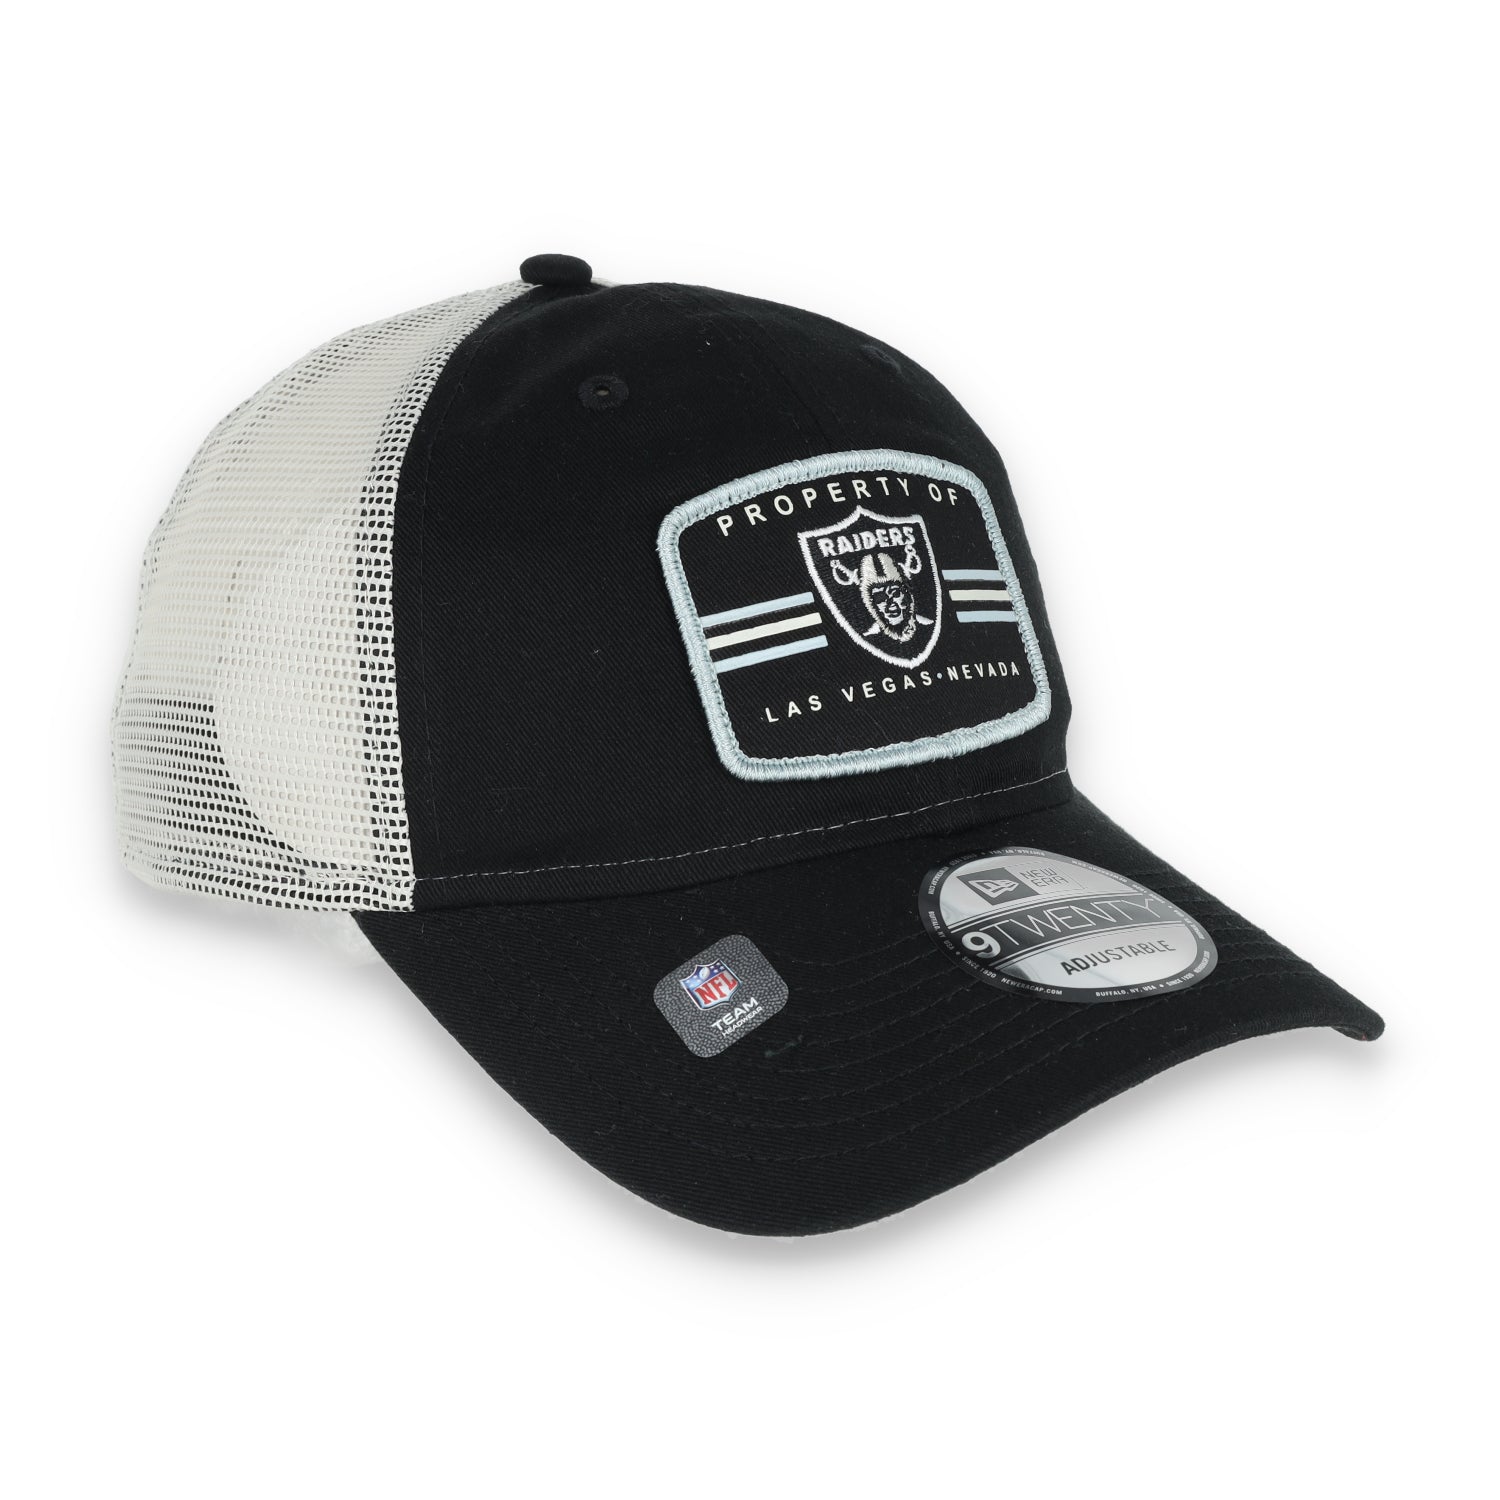 New Era Las Vegas Raiders Property 9TWENTY Adjustable Hat